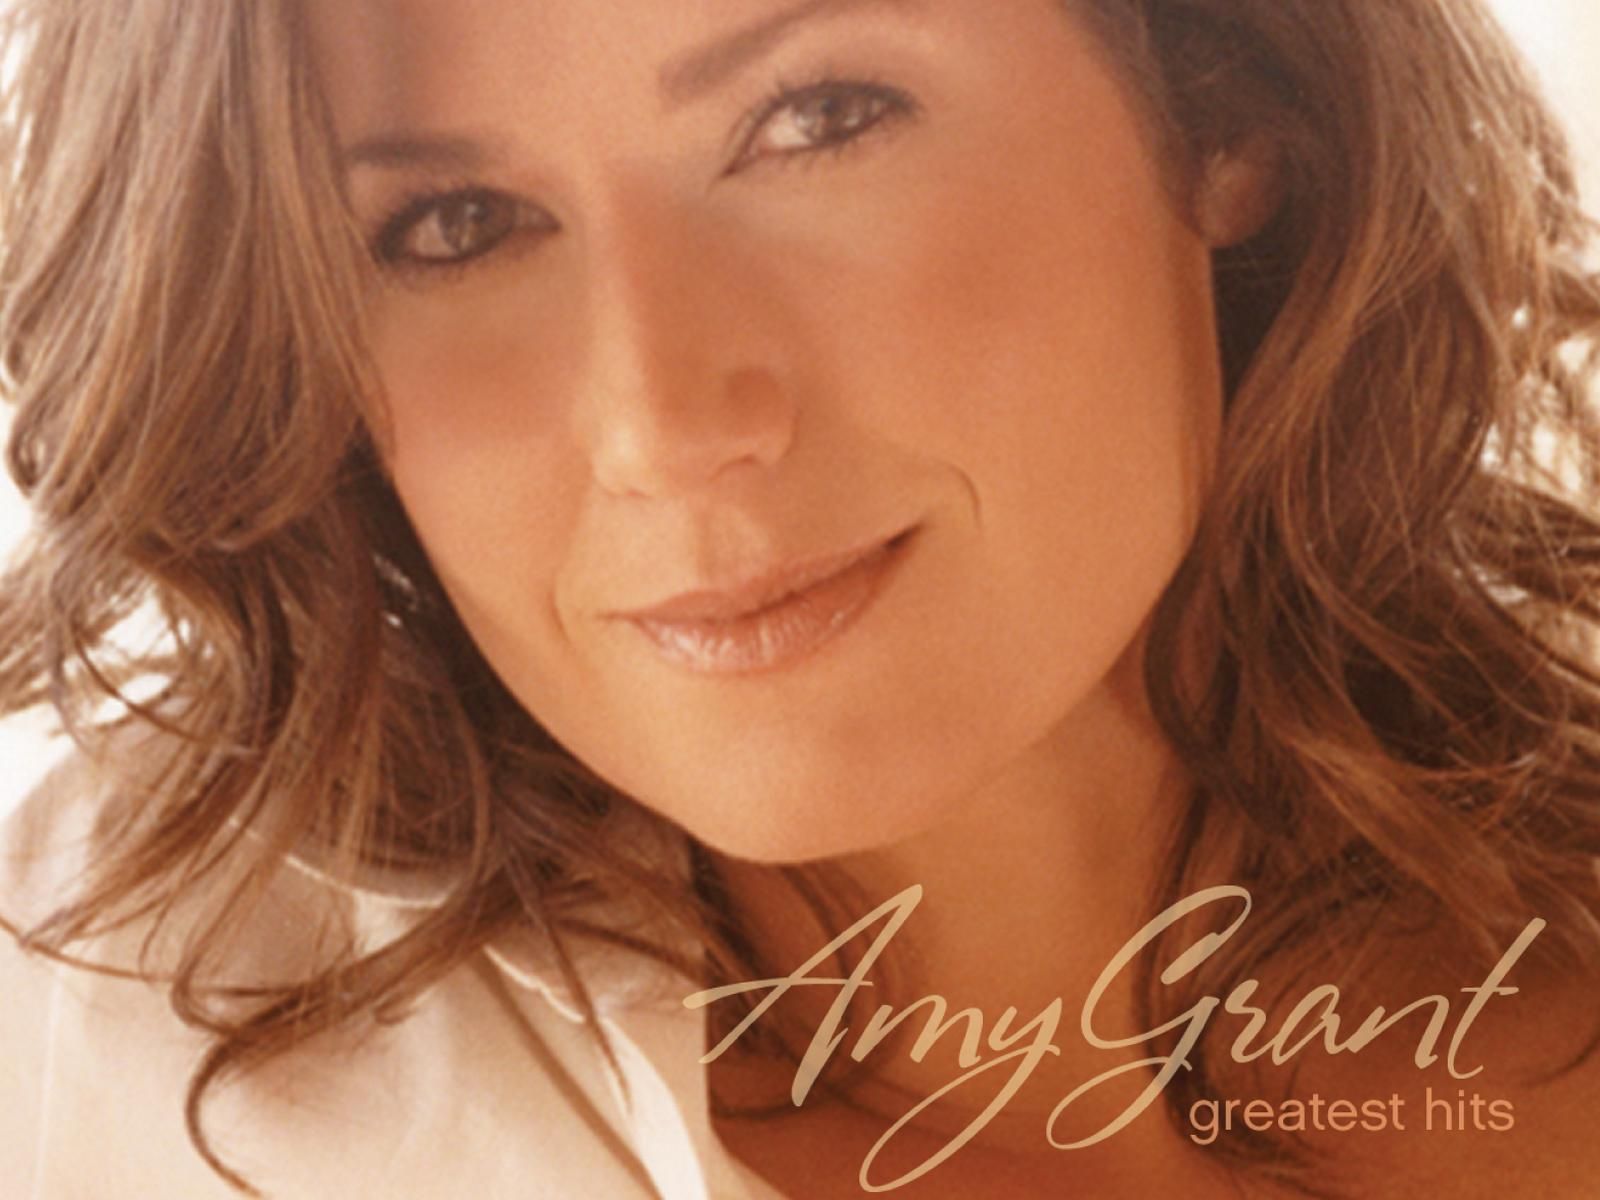 Christian Singer Amy Grant Greatest Hits Album Cover Wallpaper